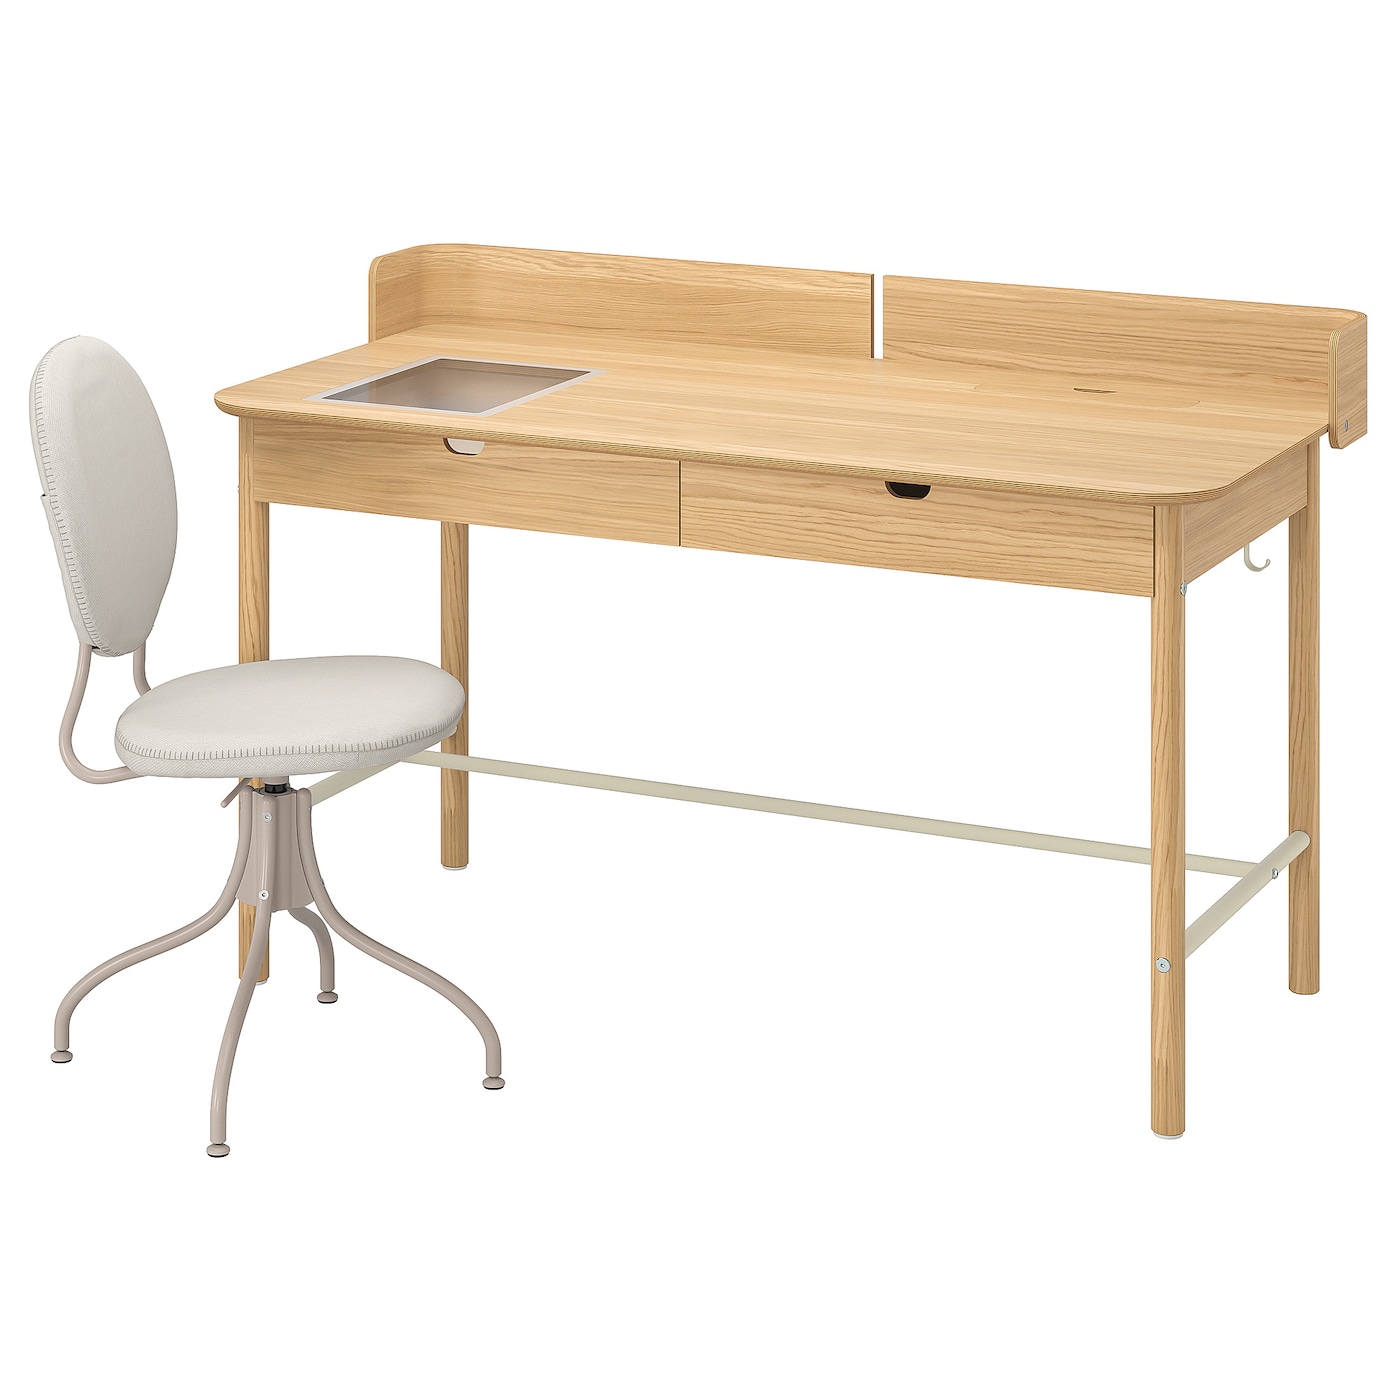 Комбинация: стол и стул - IKEA RIDSPÖ/RIDSPO/BJÖRKBERGET/BJORKBERGET, 140х70 см, дуб, РИДСПО/БЬЕРБЕРГЕТ ИКЕА